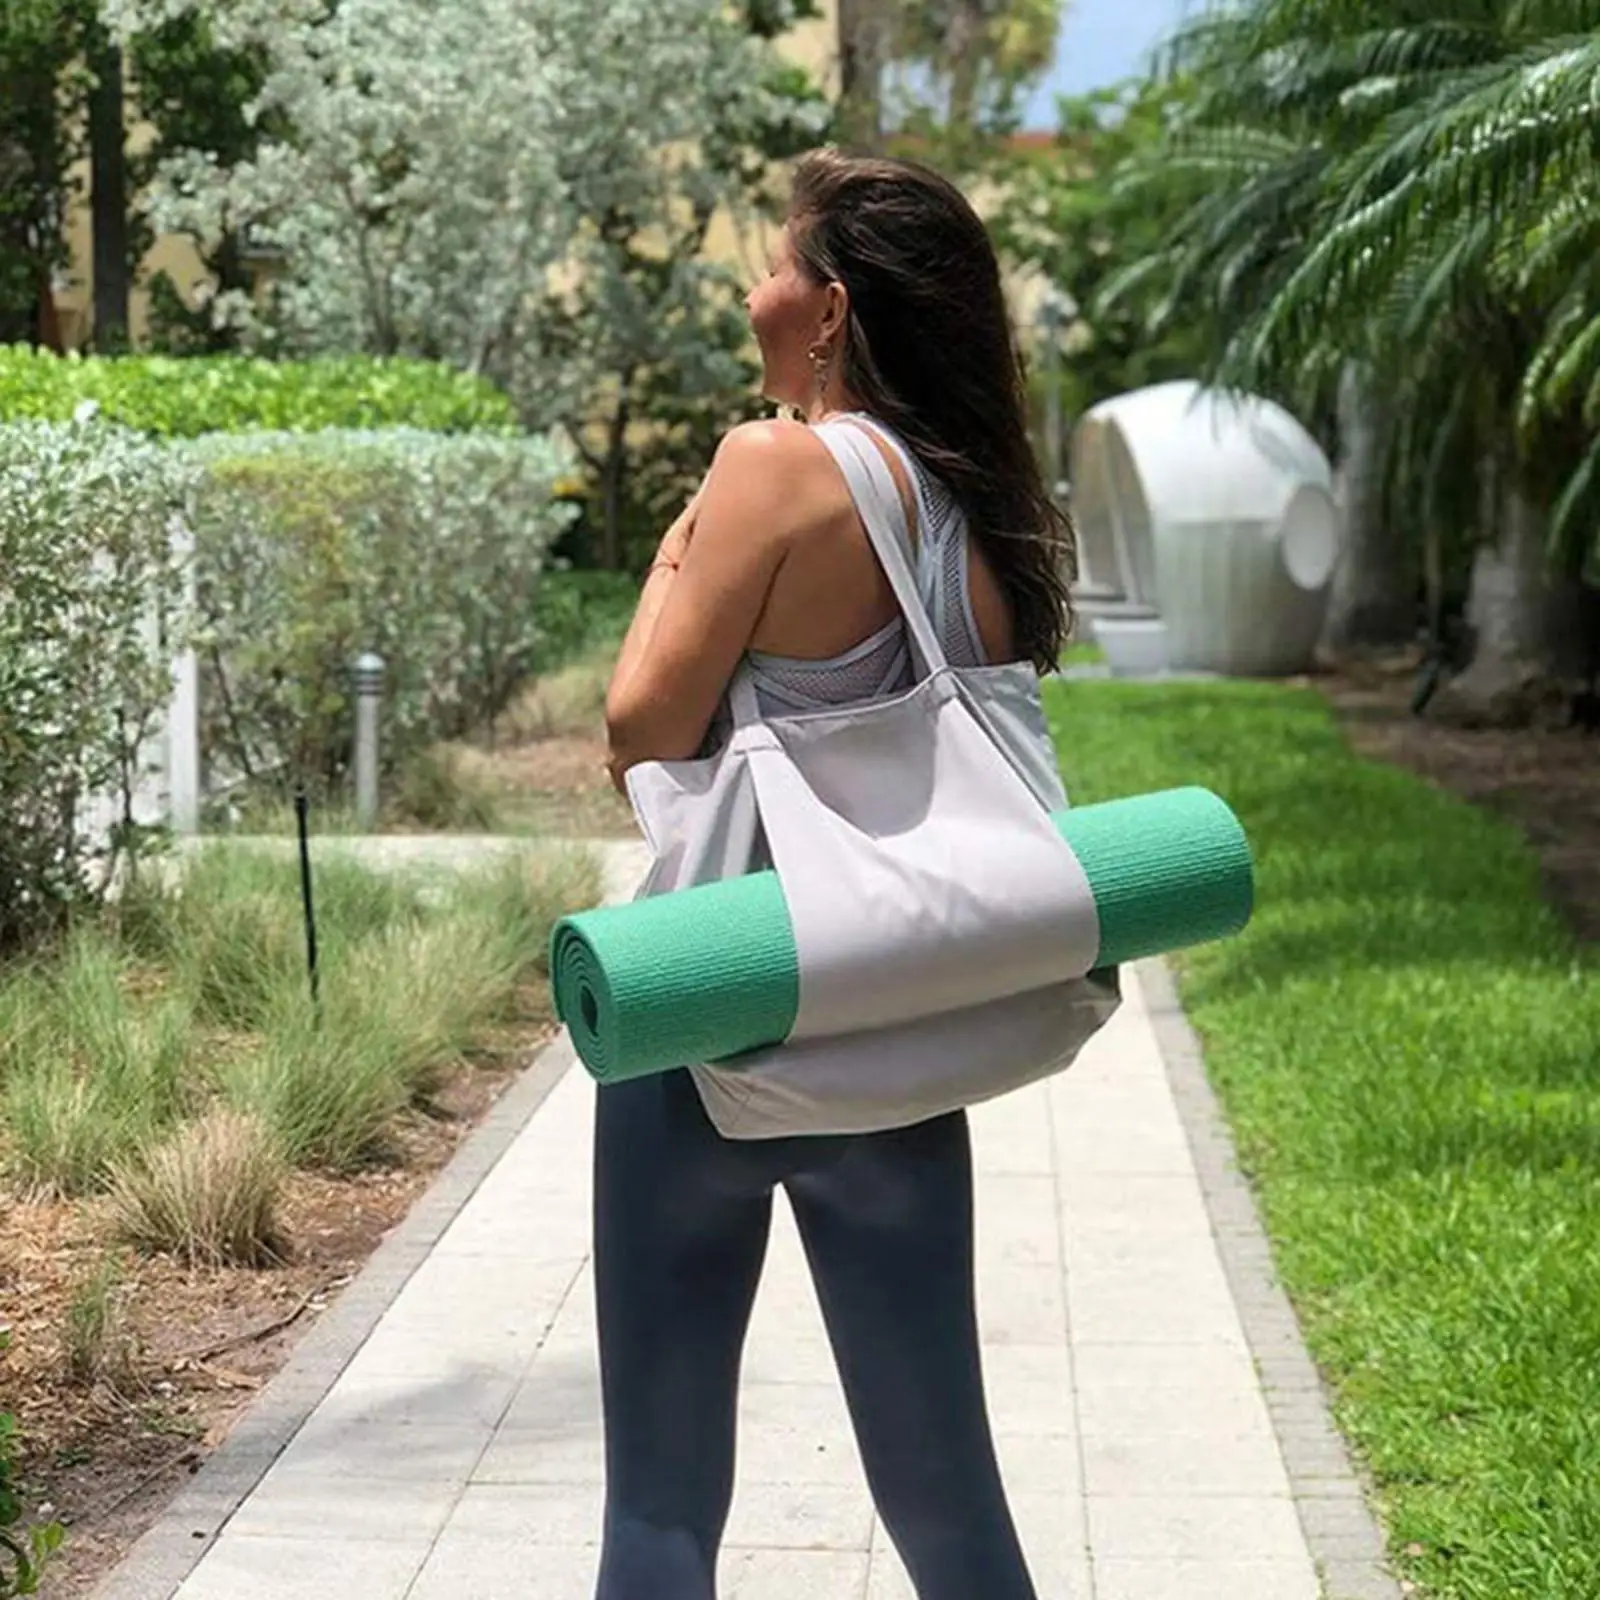 Women Yoga Bag Mat Carriers Portable Shoulder Bag for Beach Gym Workout Multi-Functional Canvas Tote Shoulder Bag